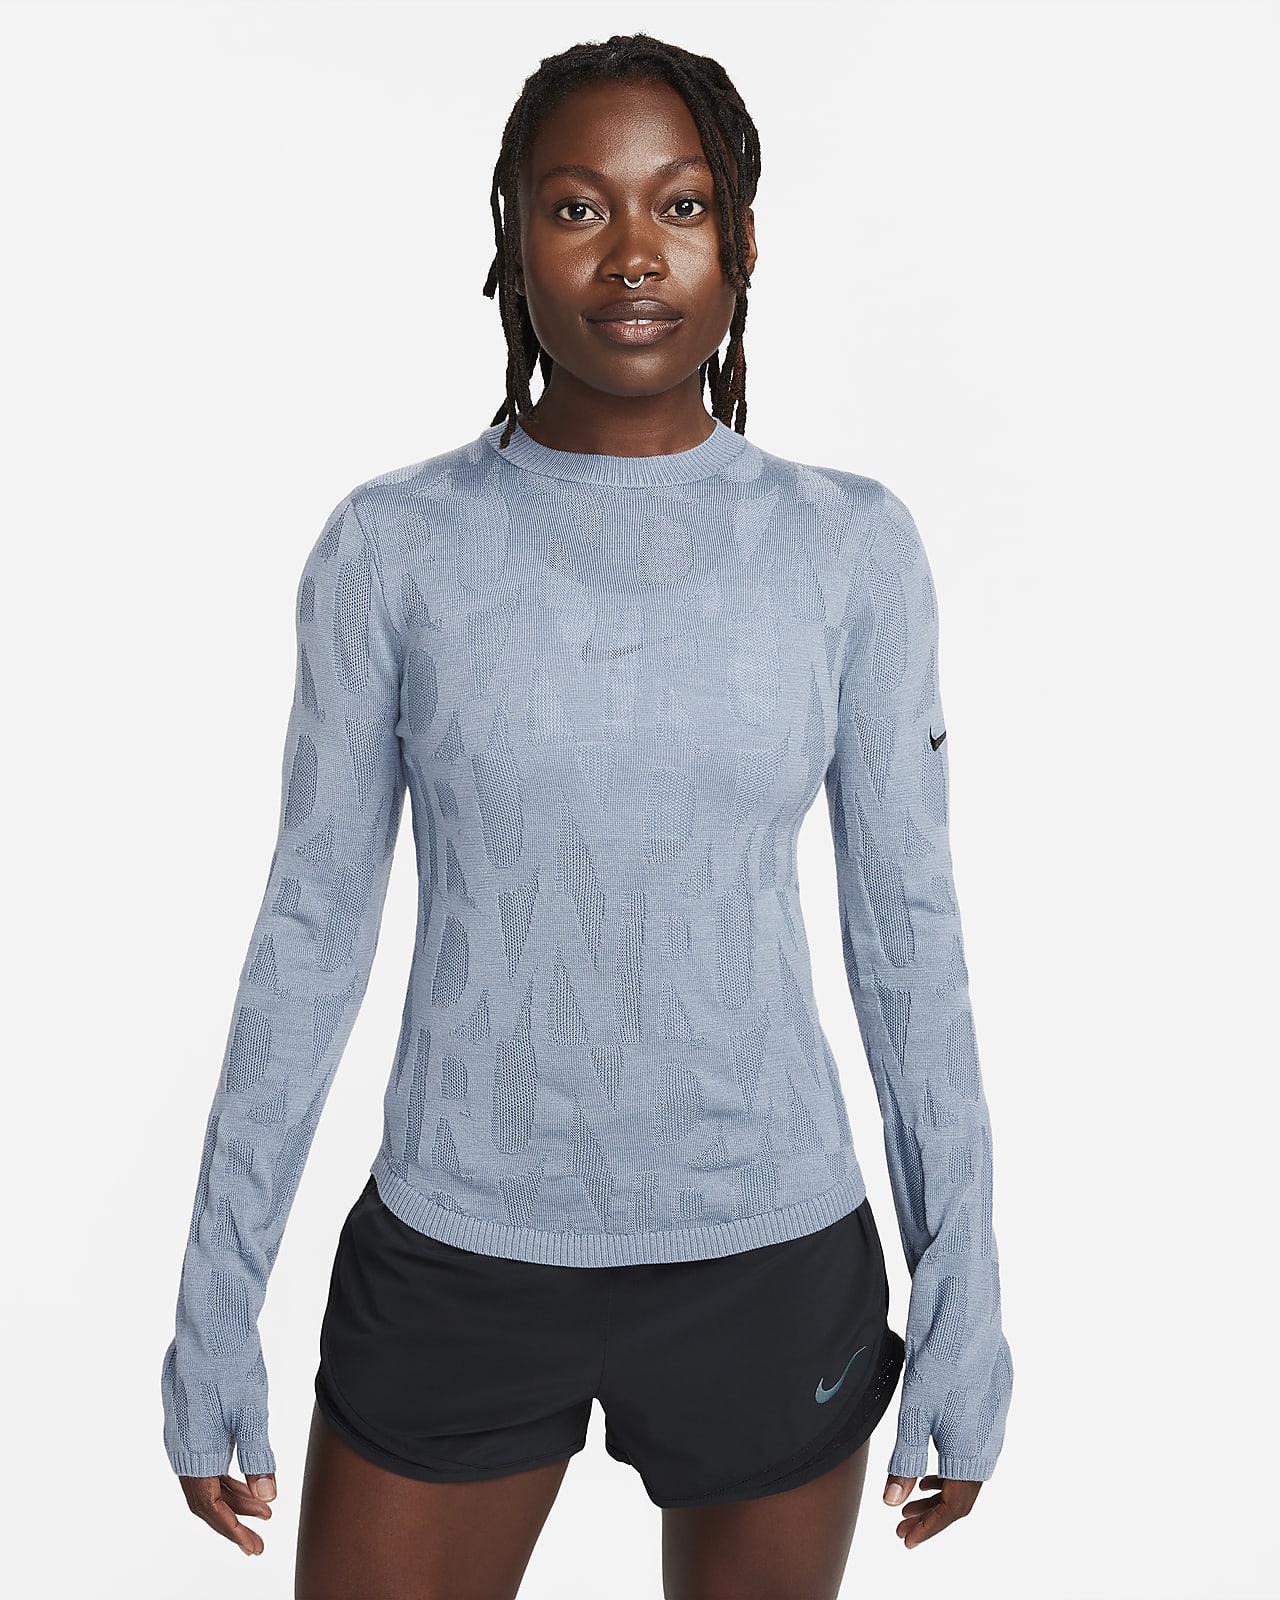 Damska środkowa warstwa ubioru do biegania Nike Running Division